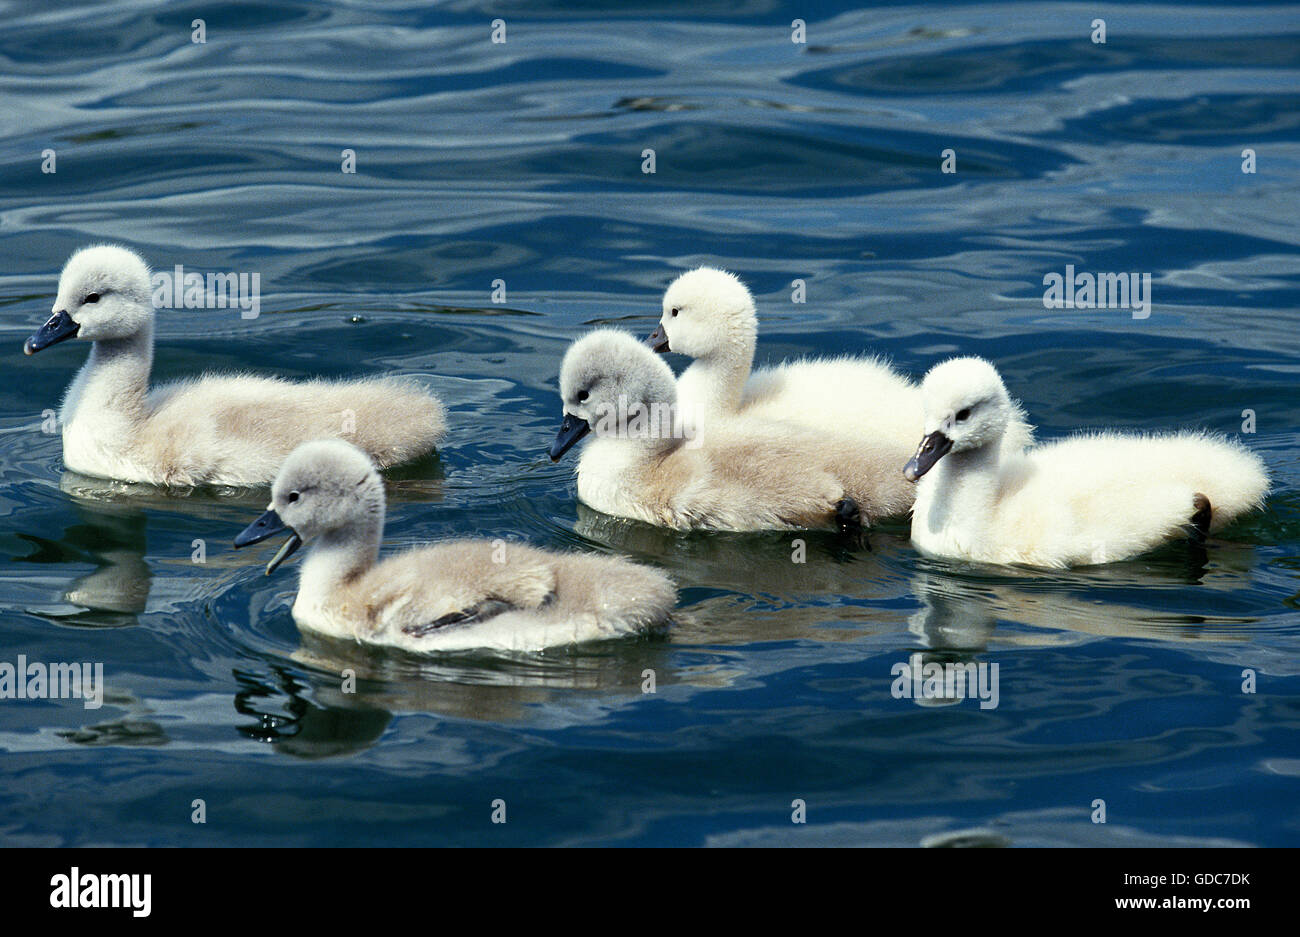 Mute Swan, cygnus olor, Chicks in Water Stock Photo